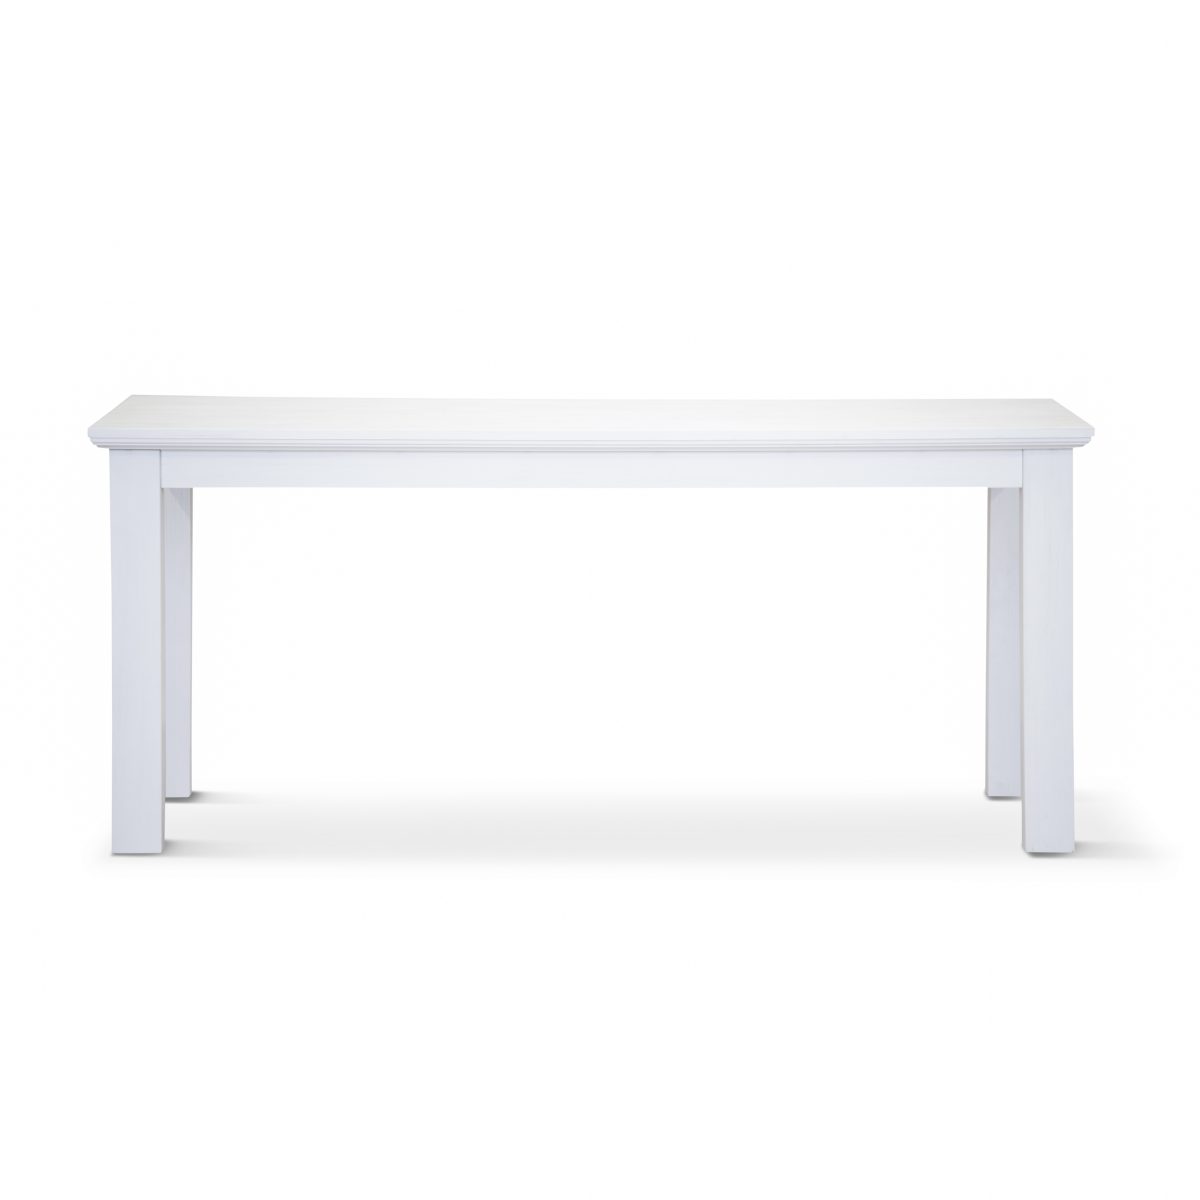 Laelia Dining Table Solid Acacia Timber Wood Coastal Furniture – White – 180x100x77 cm